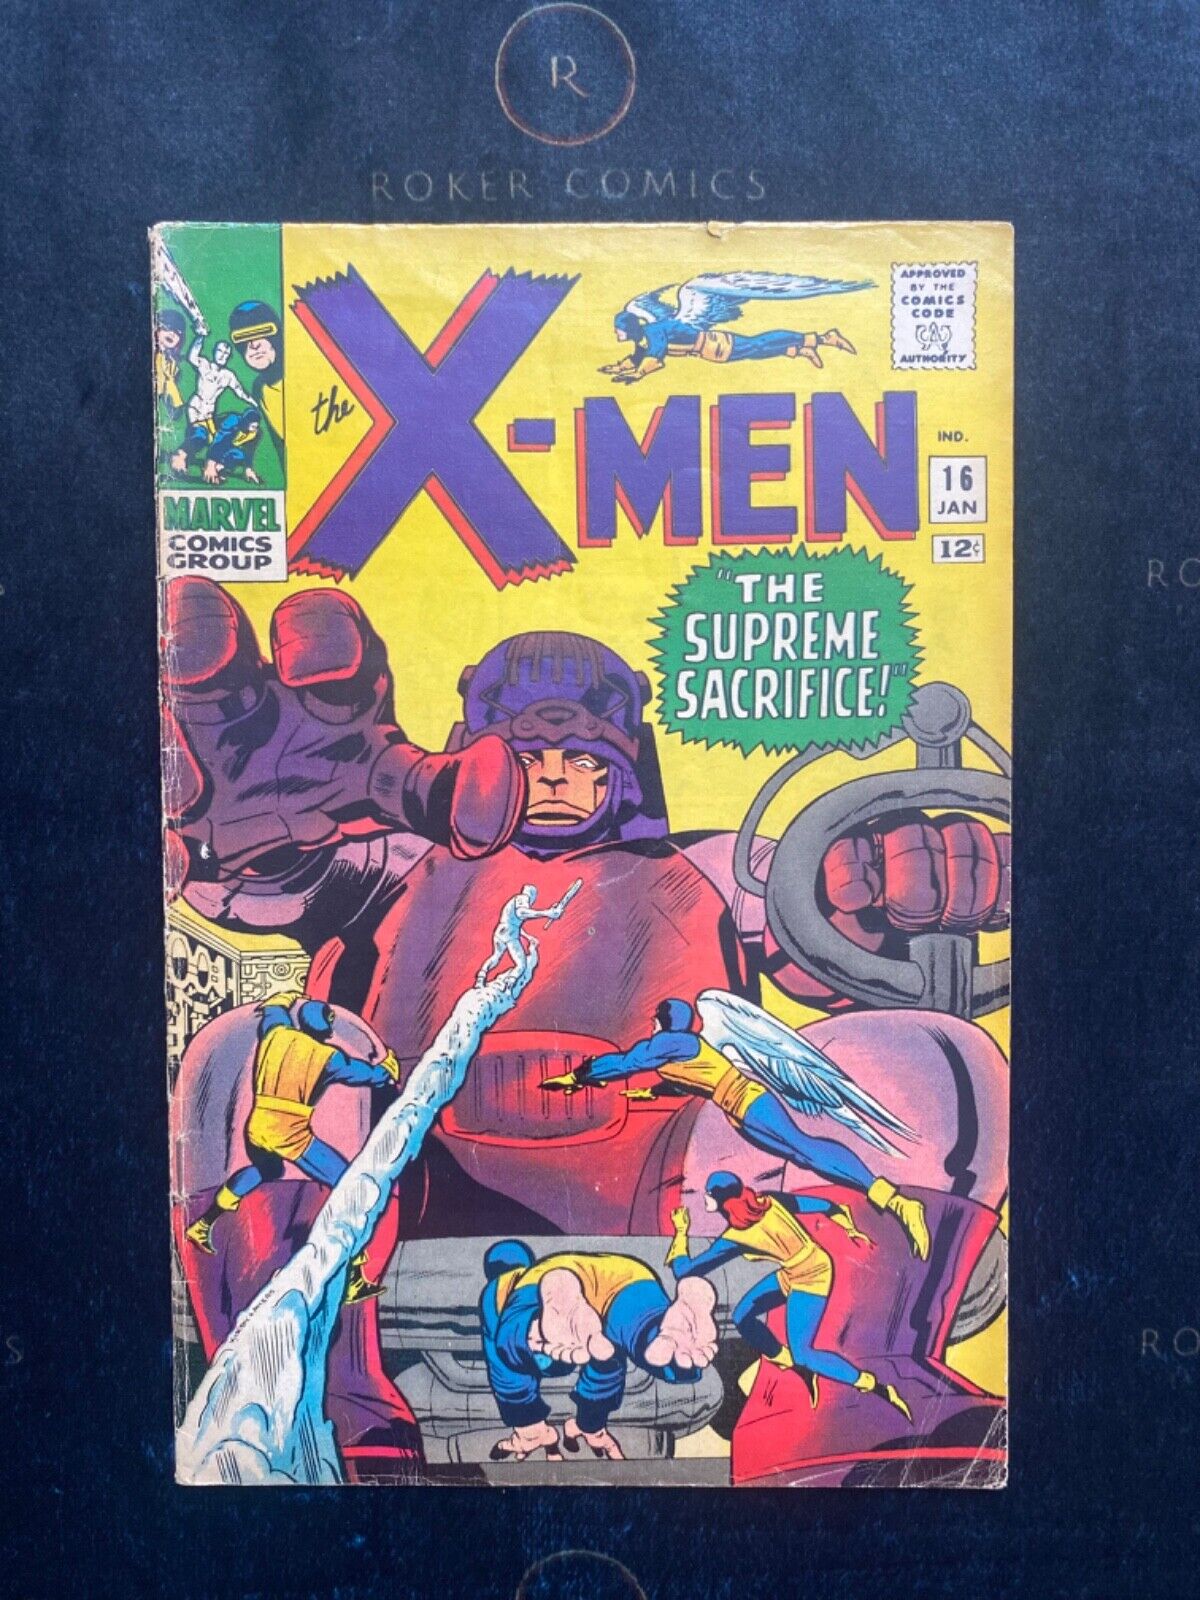 RARE 1966 The X-Men #16 Great Condition